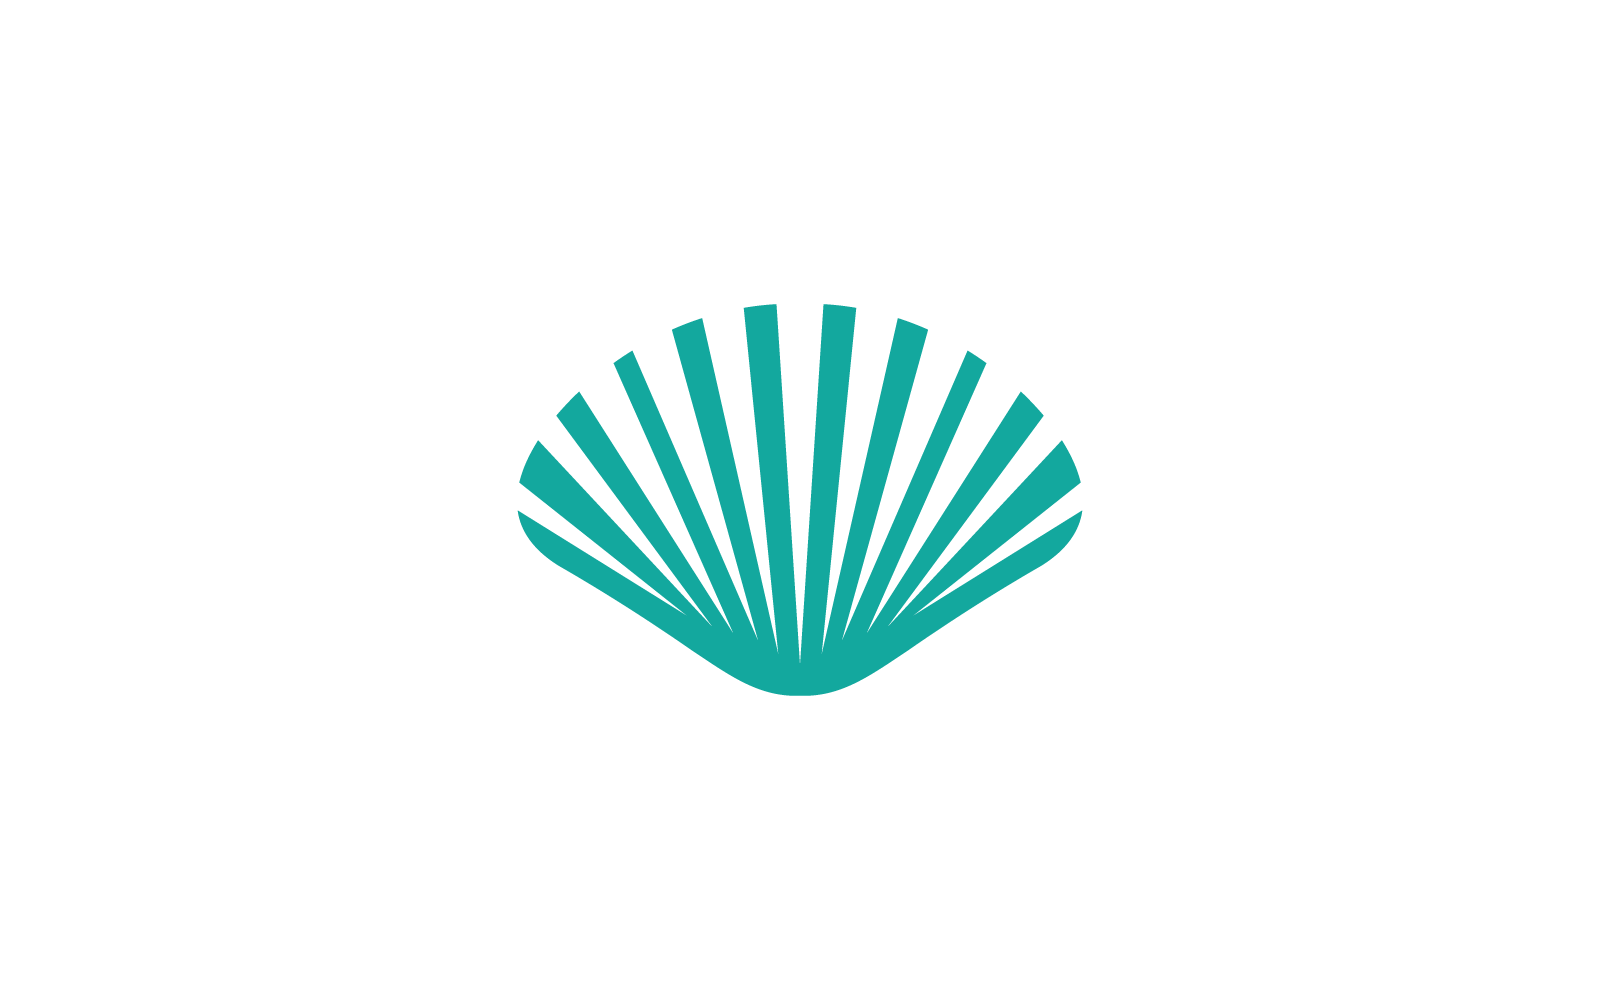 Shell logo illustration vector design template